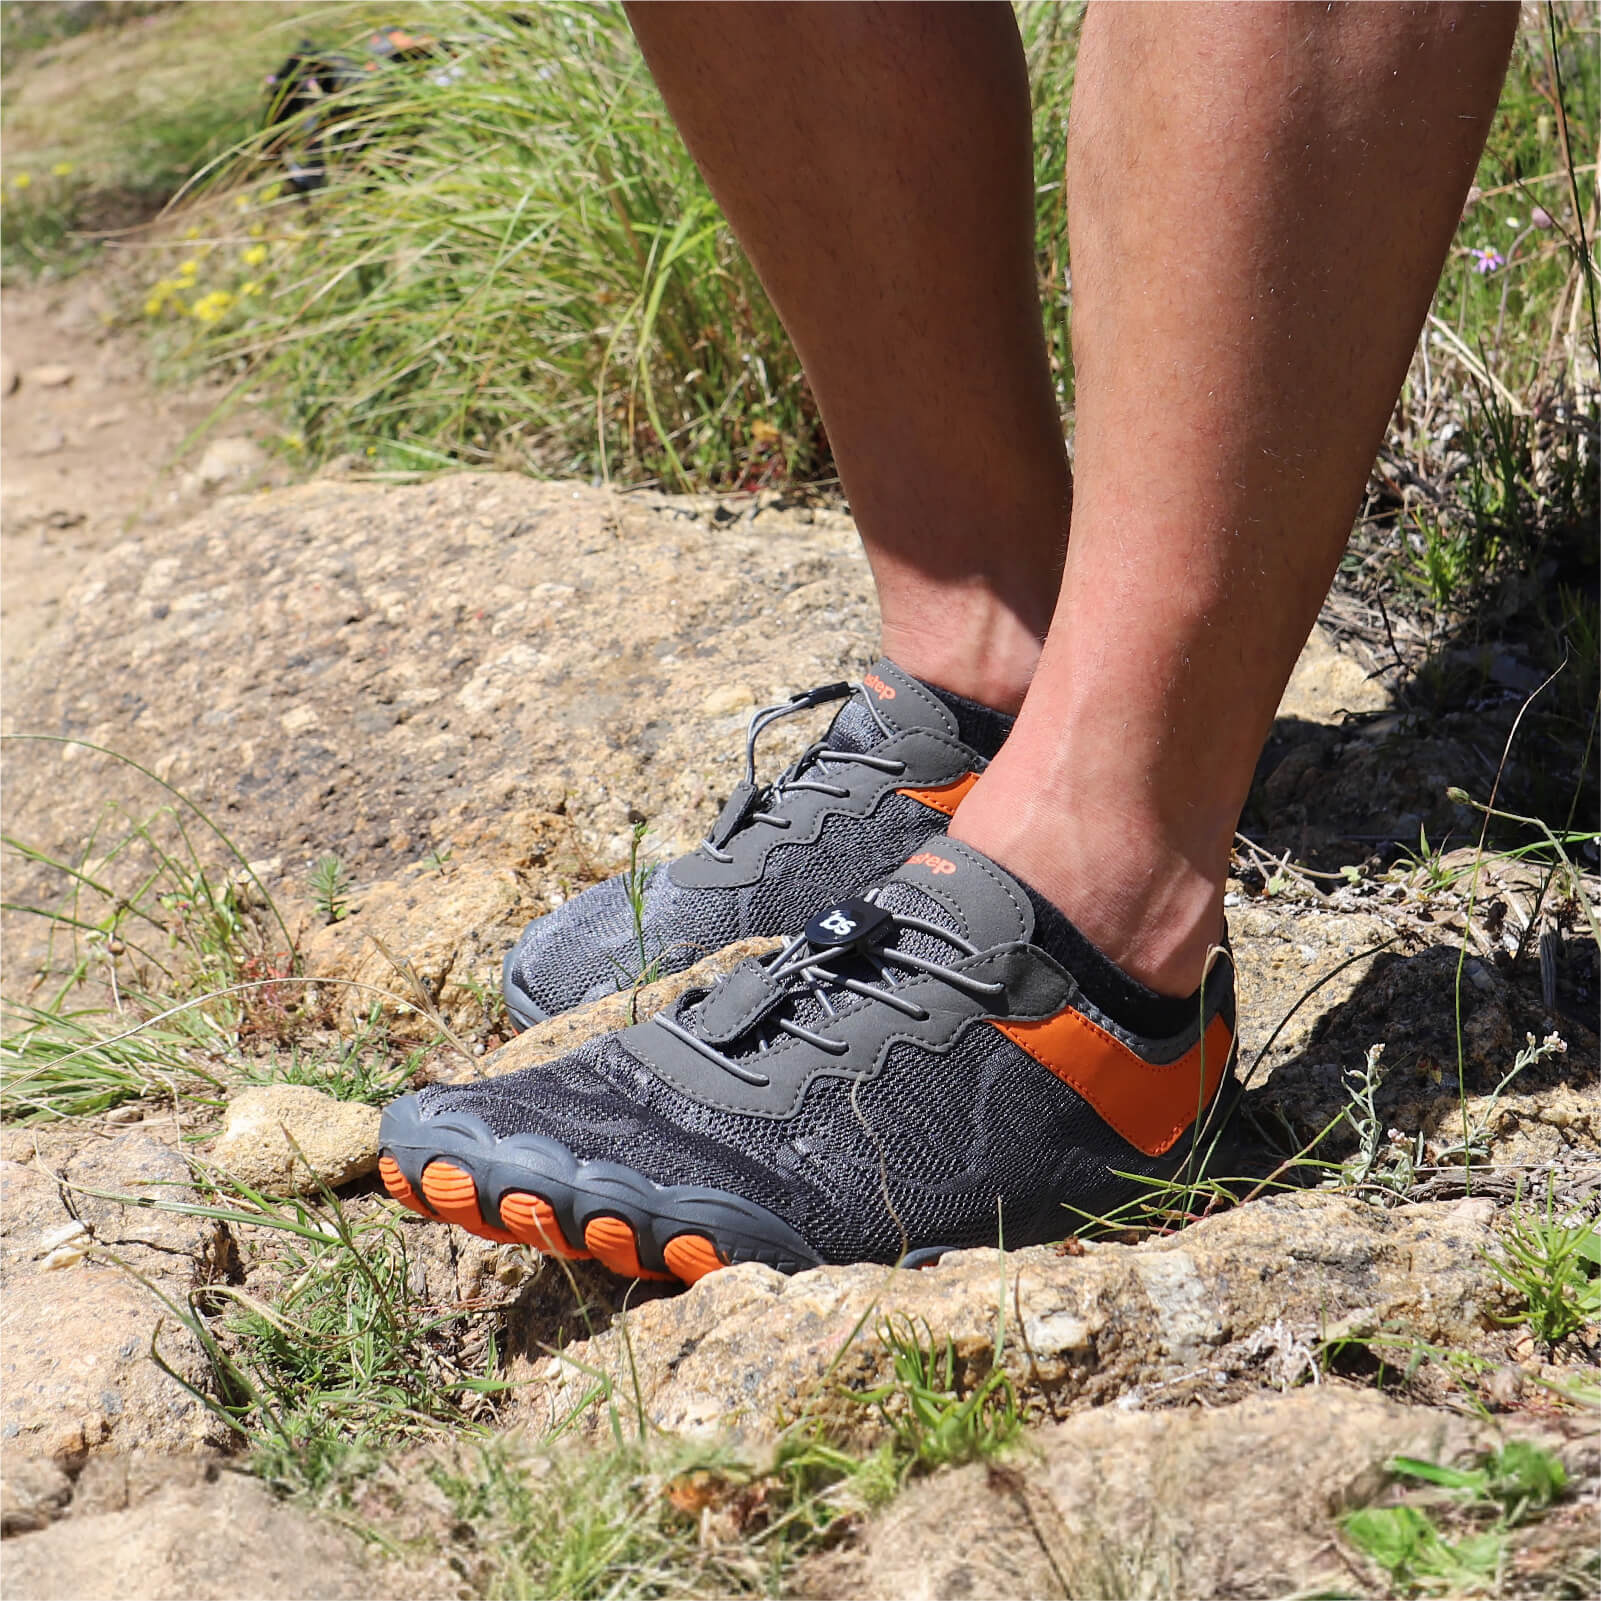 man wearing Barestep Active 2.0 barefoot shoe in nature, showcasing it's versatile design.